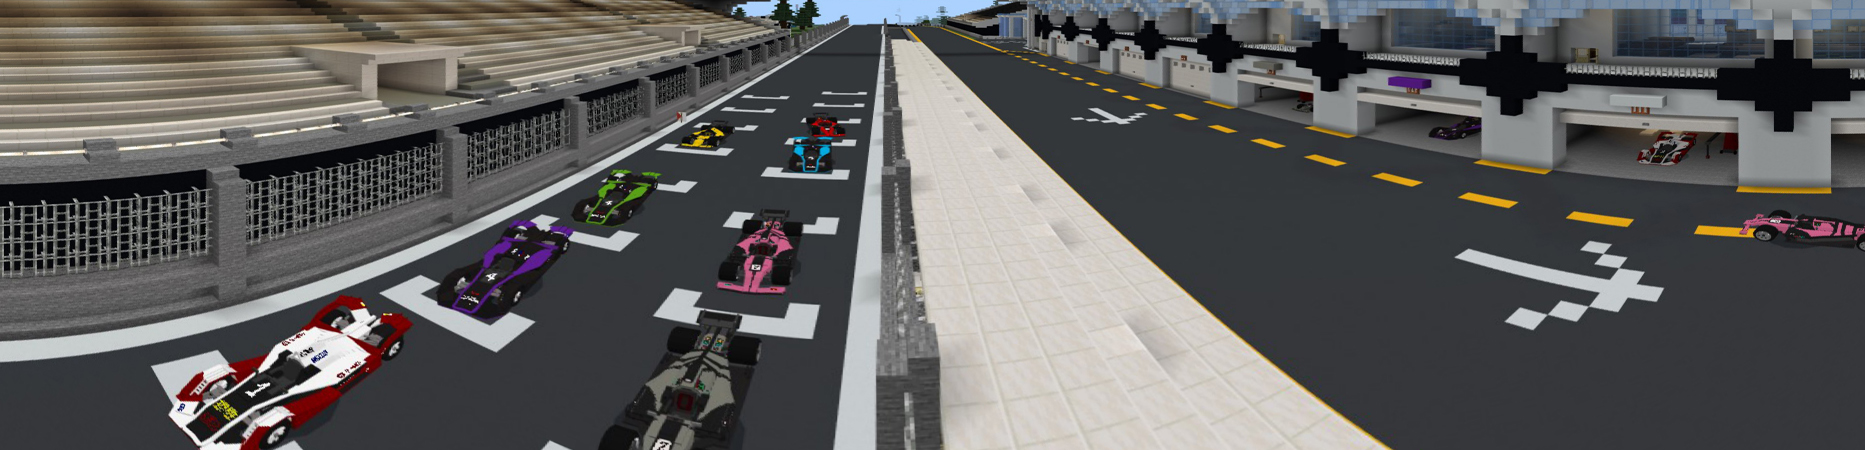 M1 Racing In Minecraft Marketplace Minecraft